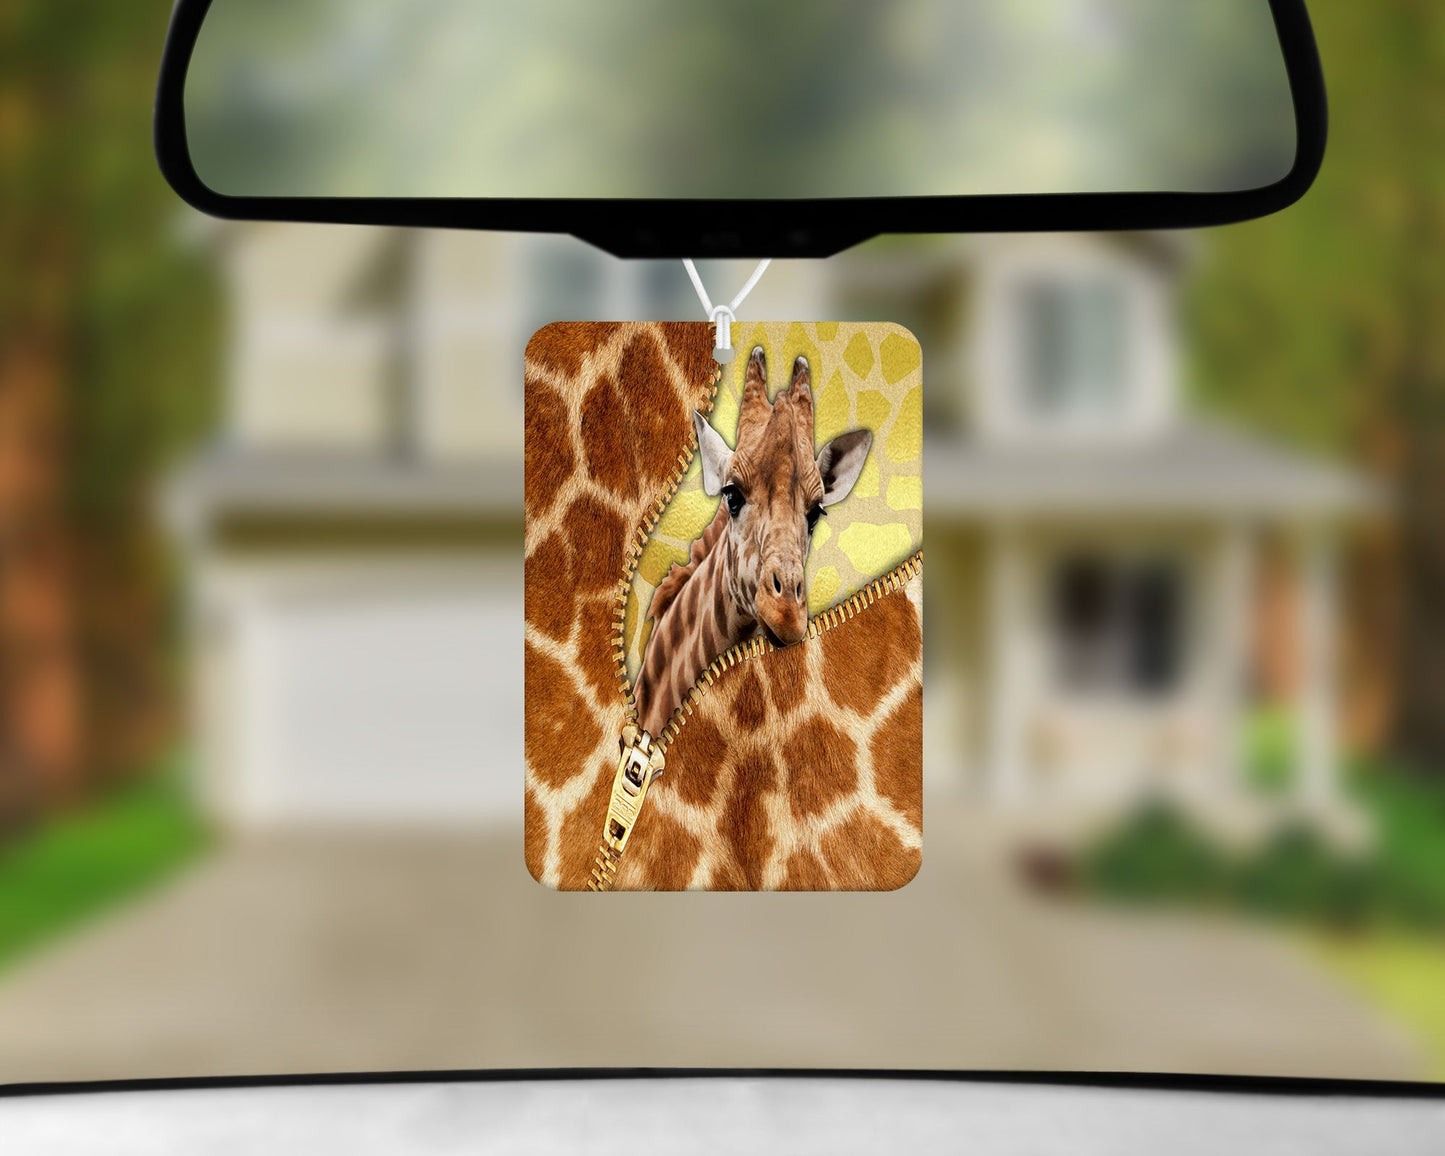 Giraffe|Freshie|Includes Scent Bottle - Vehicle Air Freshener